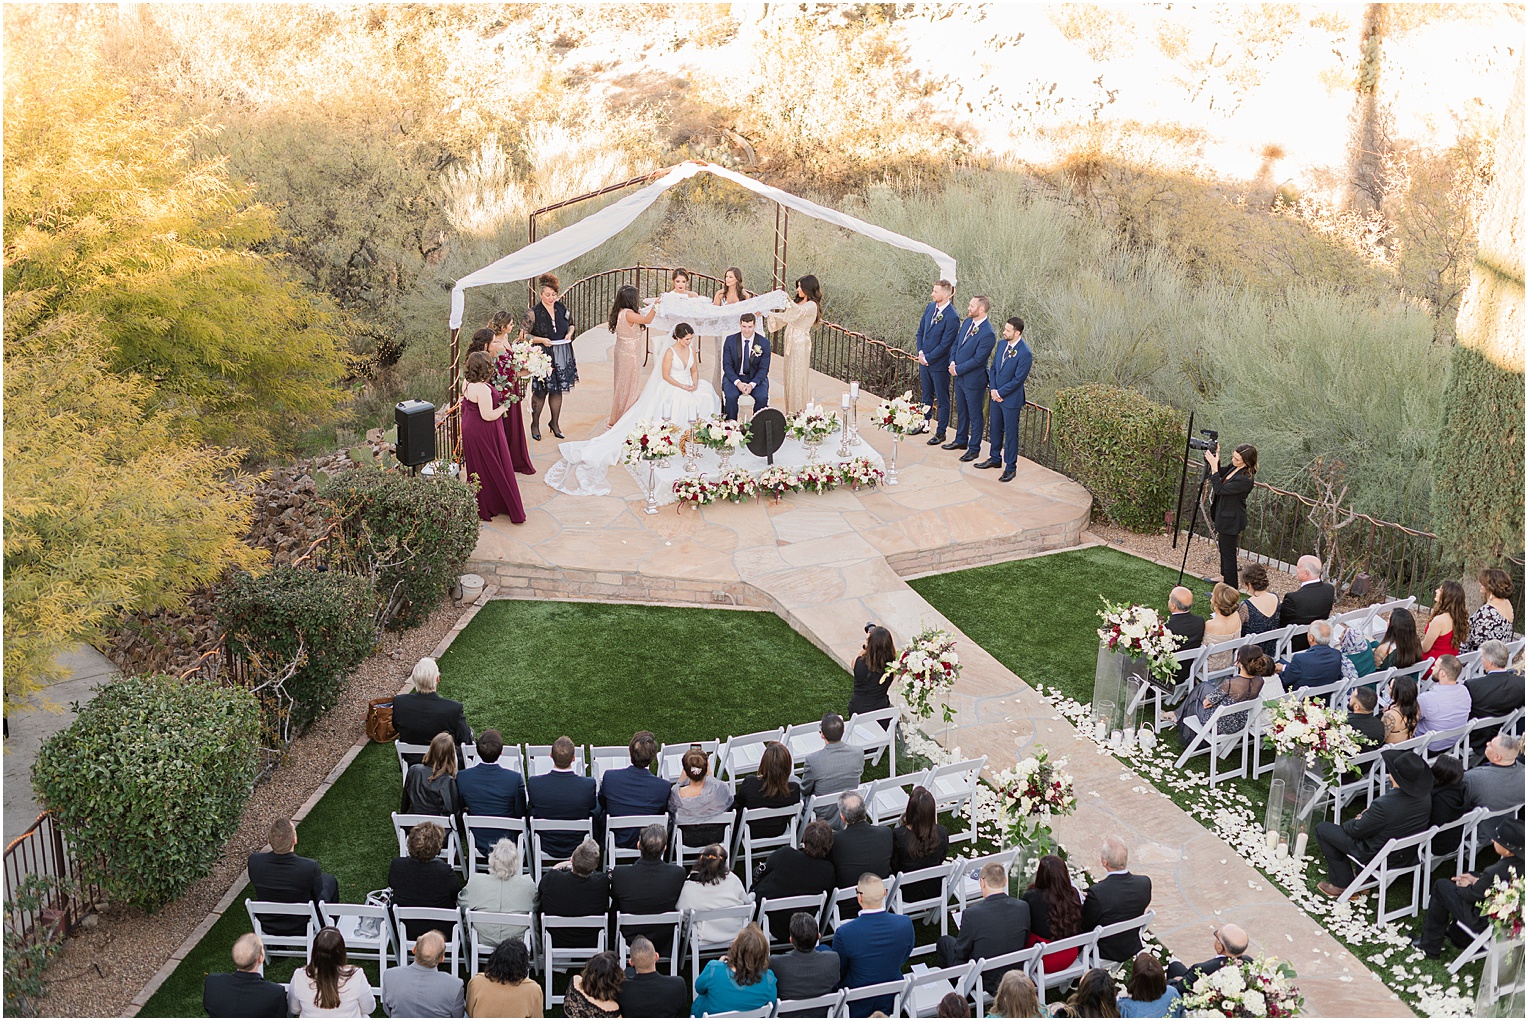 Saguaro Buttes Wedding Tucson, Arizona Farnaz & Brian romantic outdoor wedding ceremony